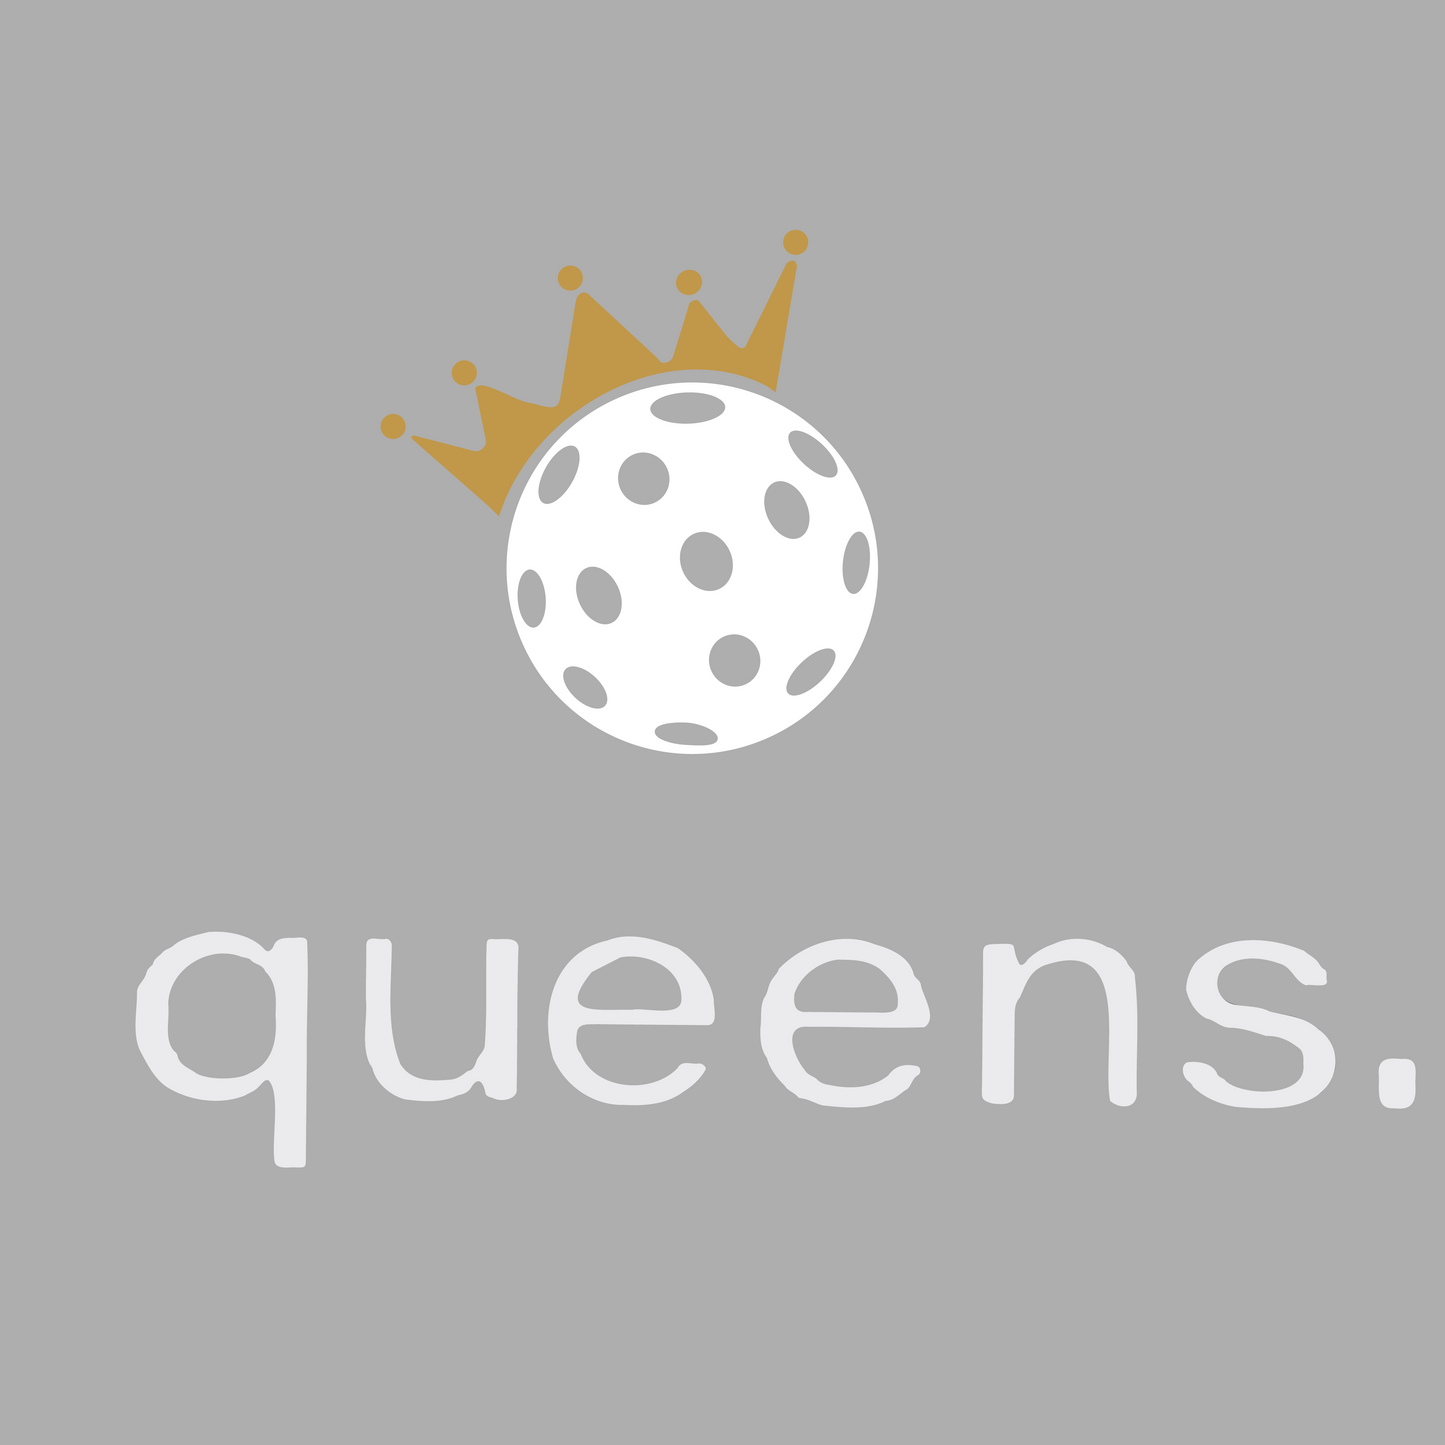 Pickleball Queen and Crown | Pickleball Sports Duffel | Medium Size Court Bag